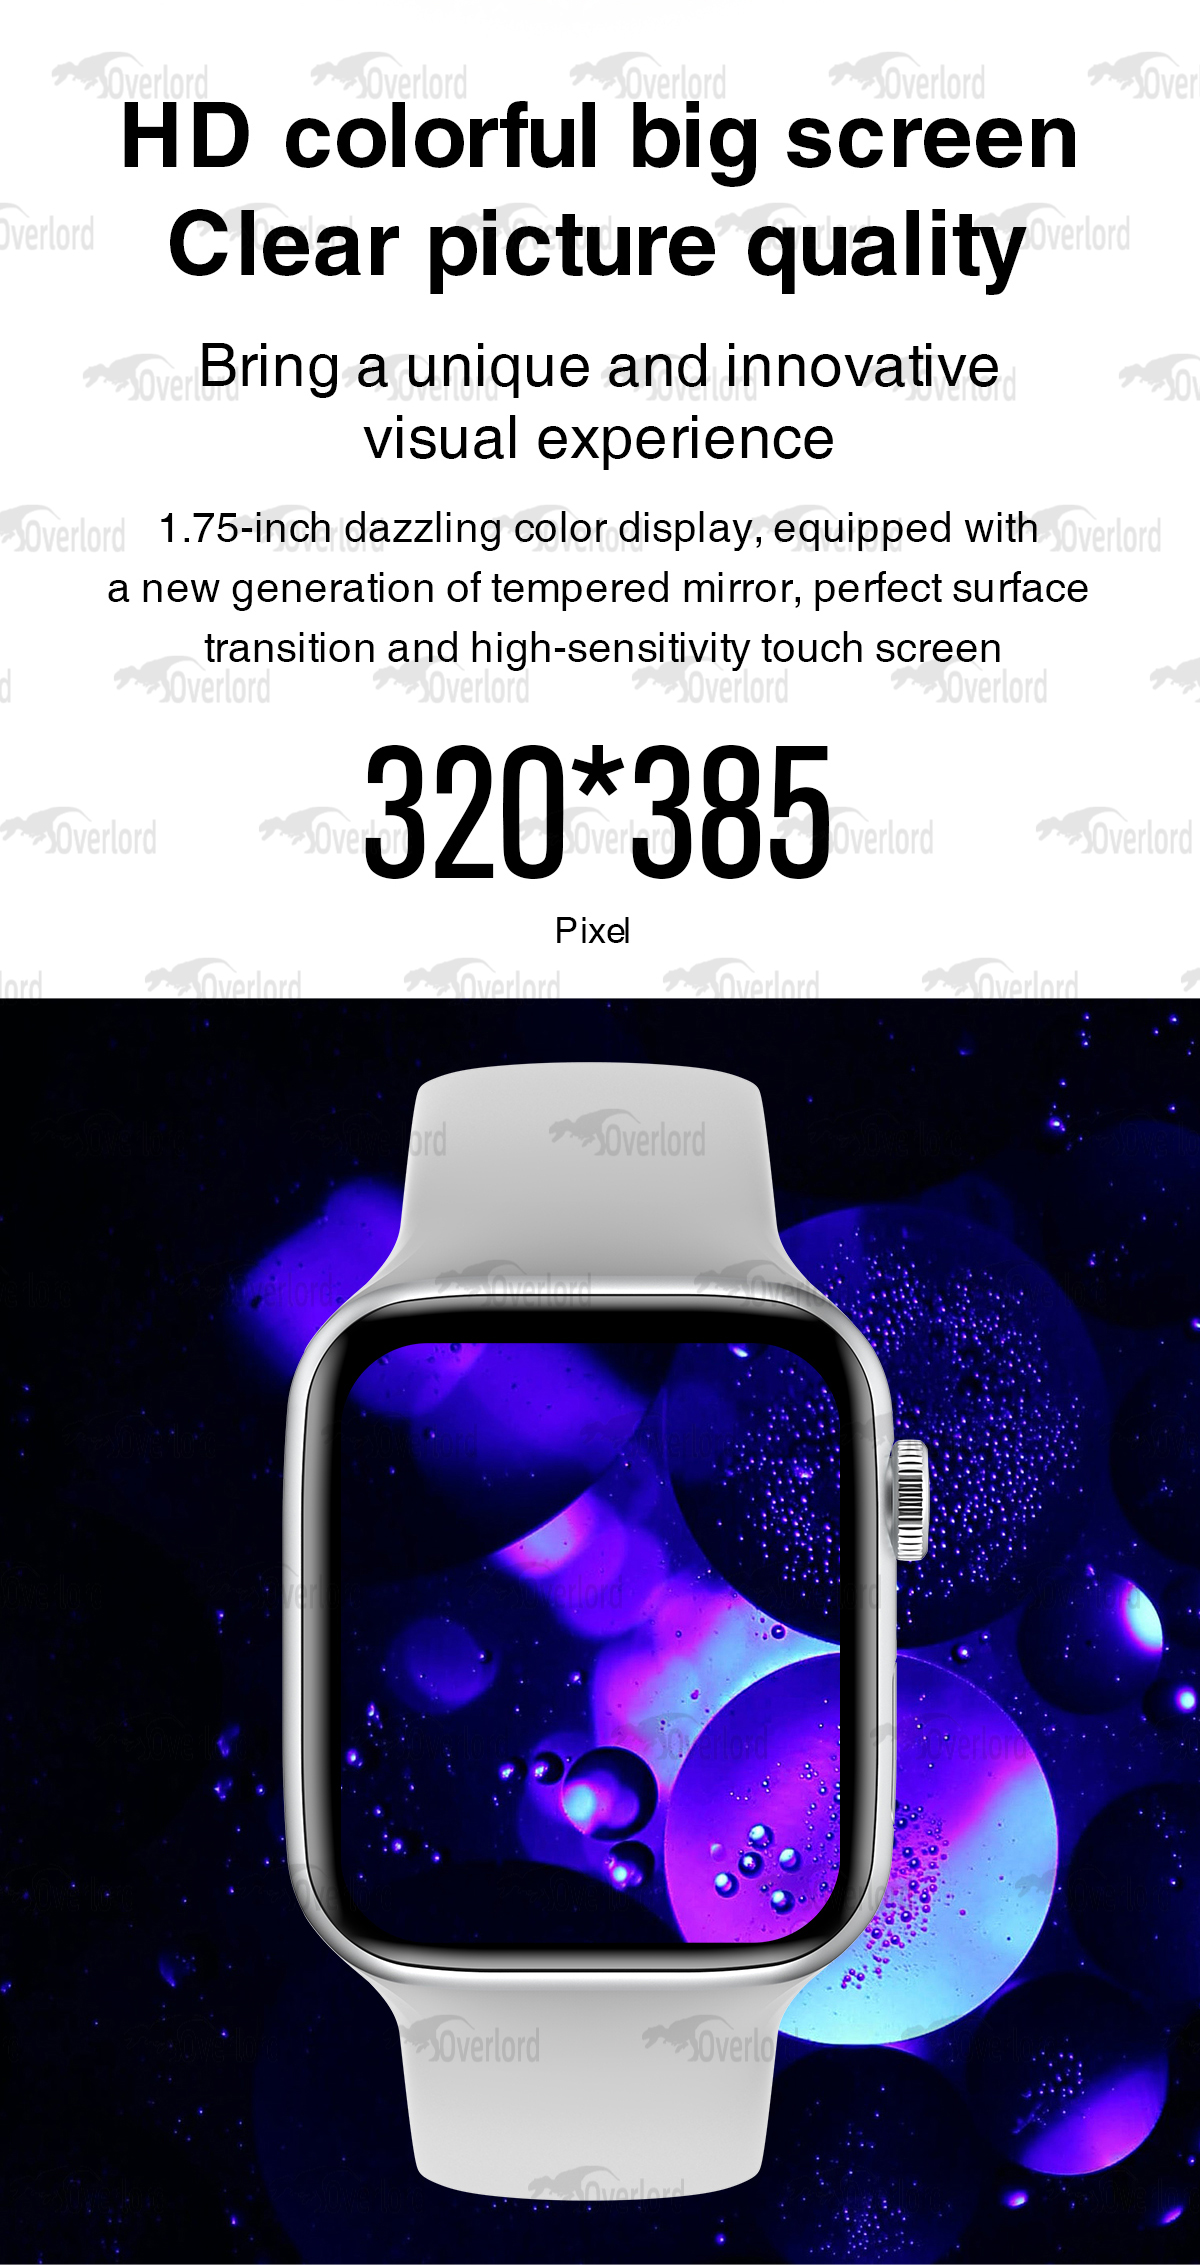 Смарт часы X22 Pro